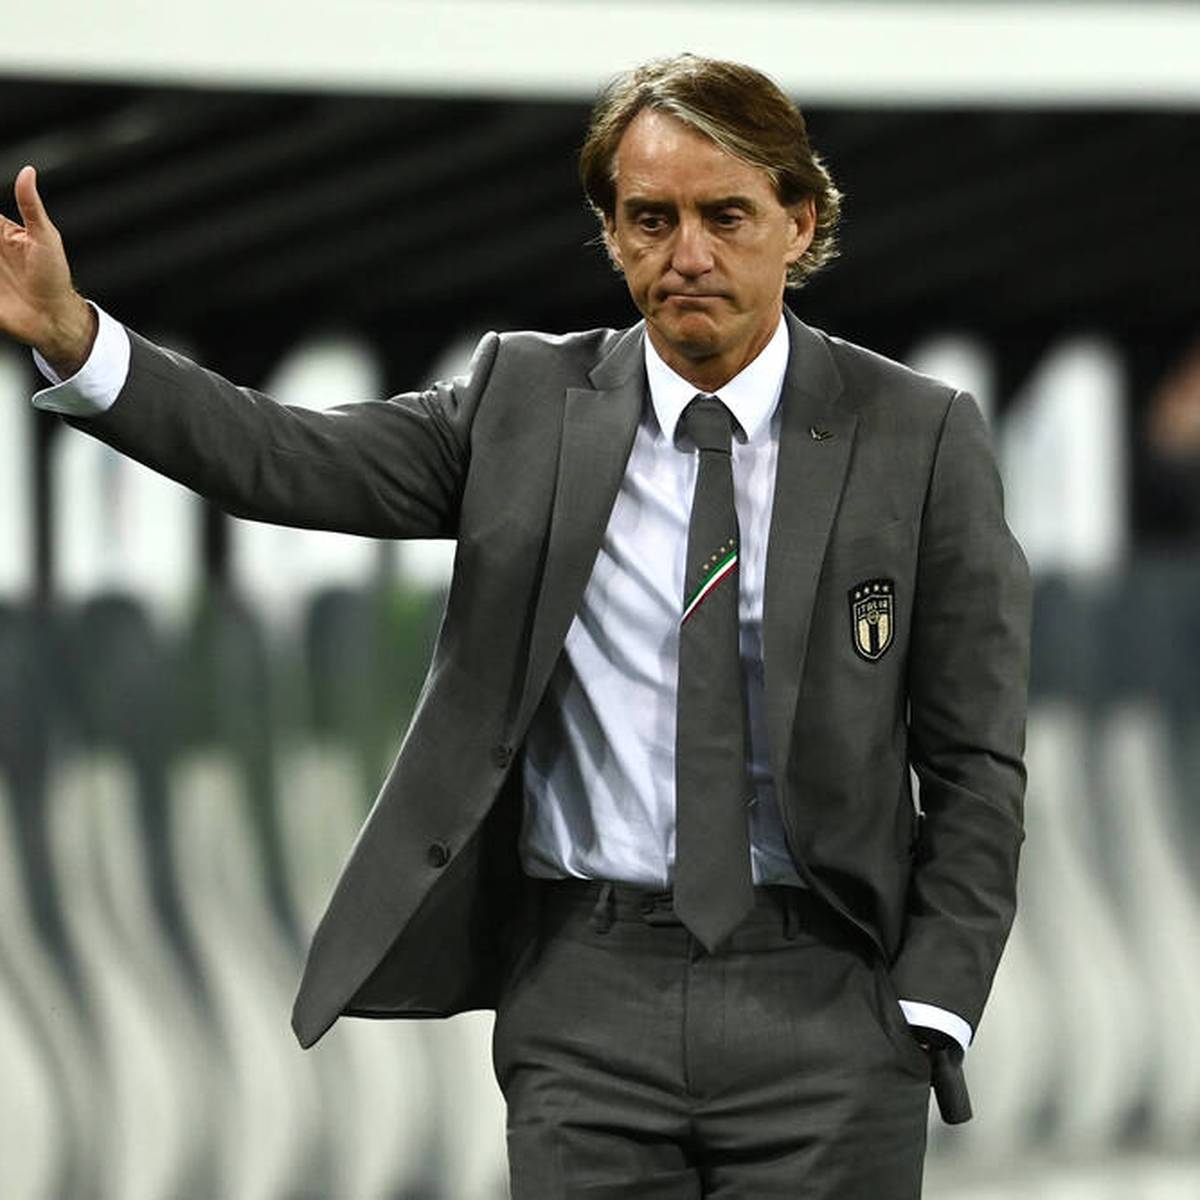 Nach Klatsche: Mancini bekommt Rückendeckung